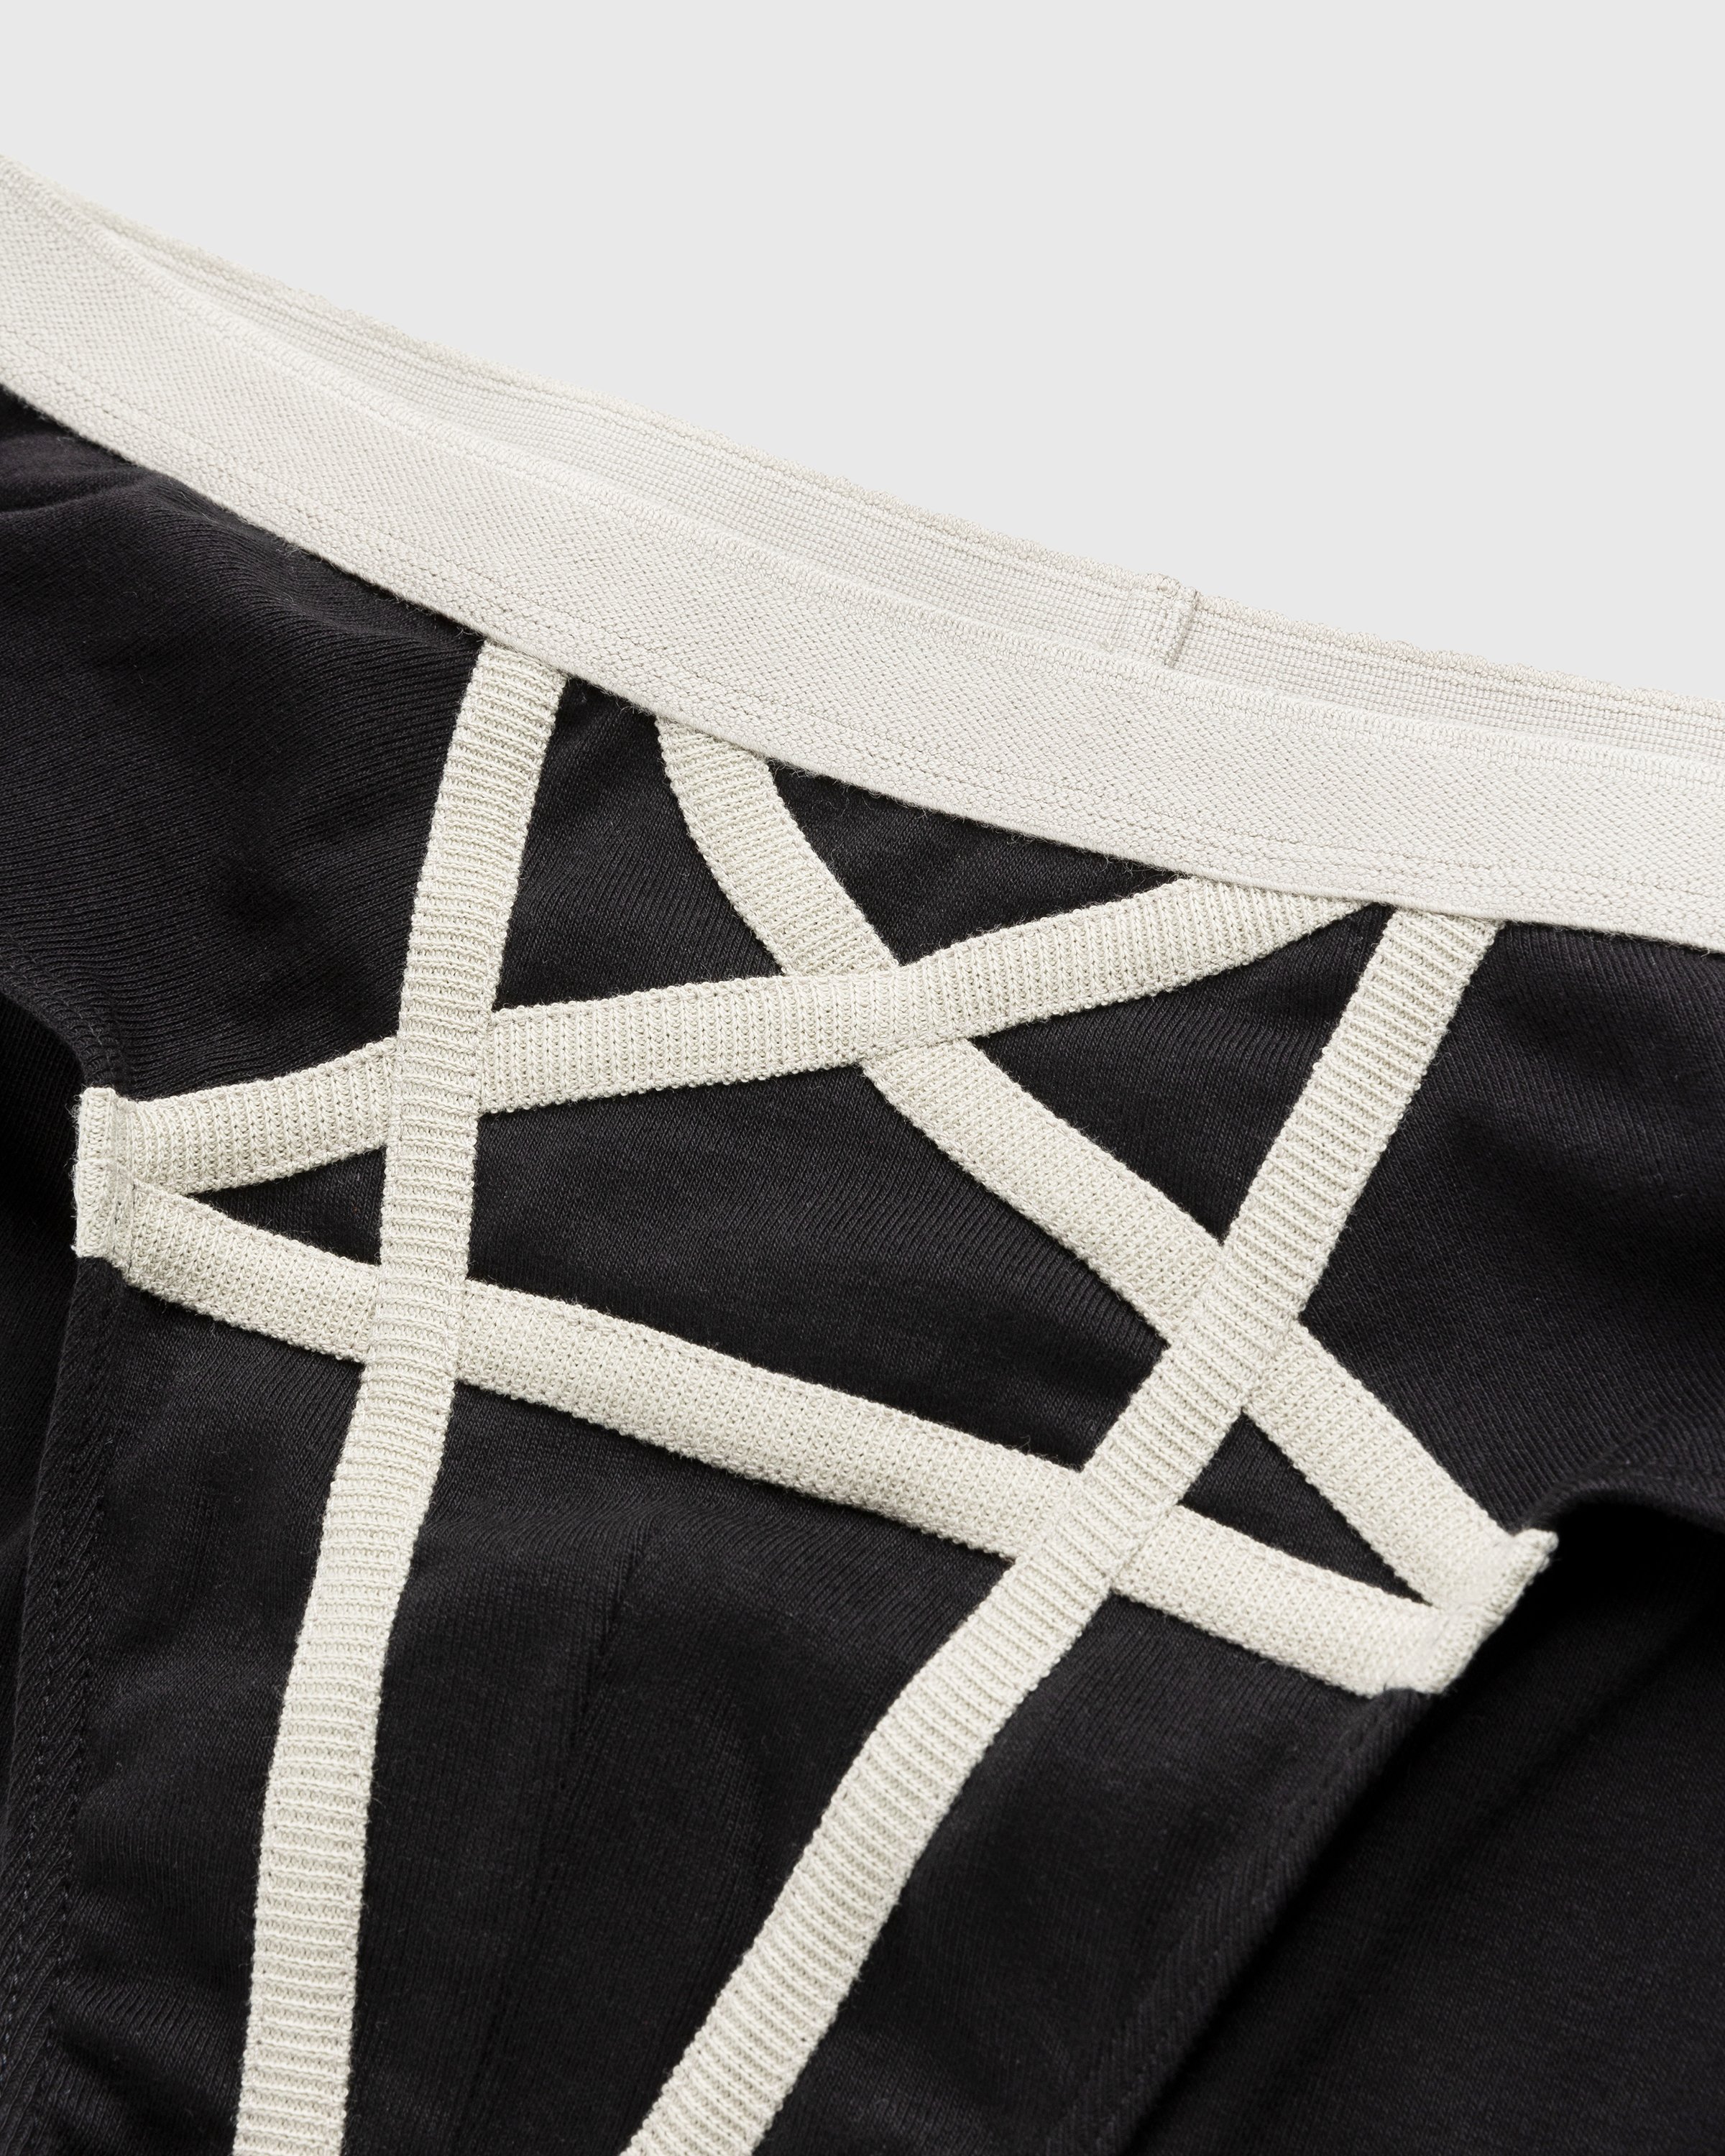 Rick Owens x Highsnobiety - Not In Paris 4 Pentagram Trunks Black - Clothing - Black - Image 4